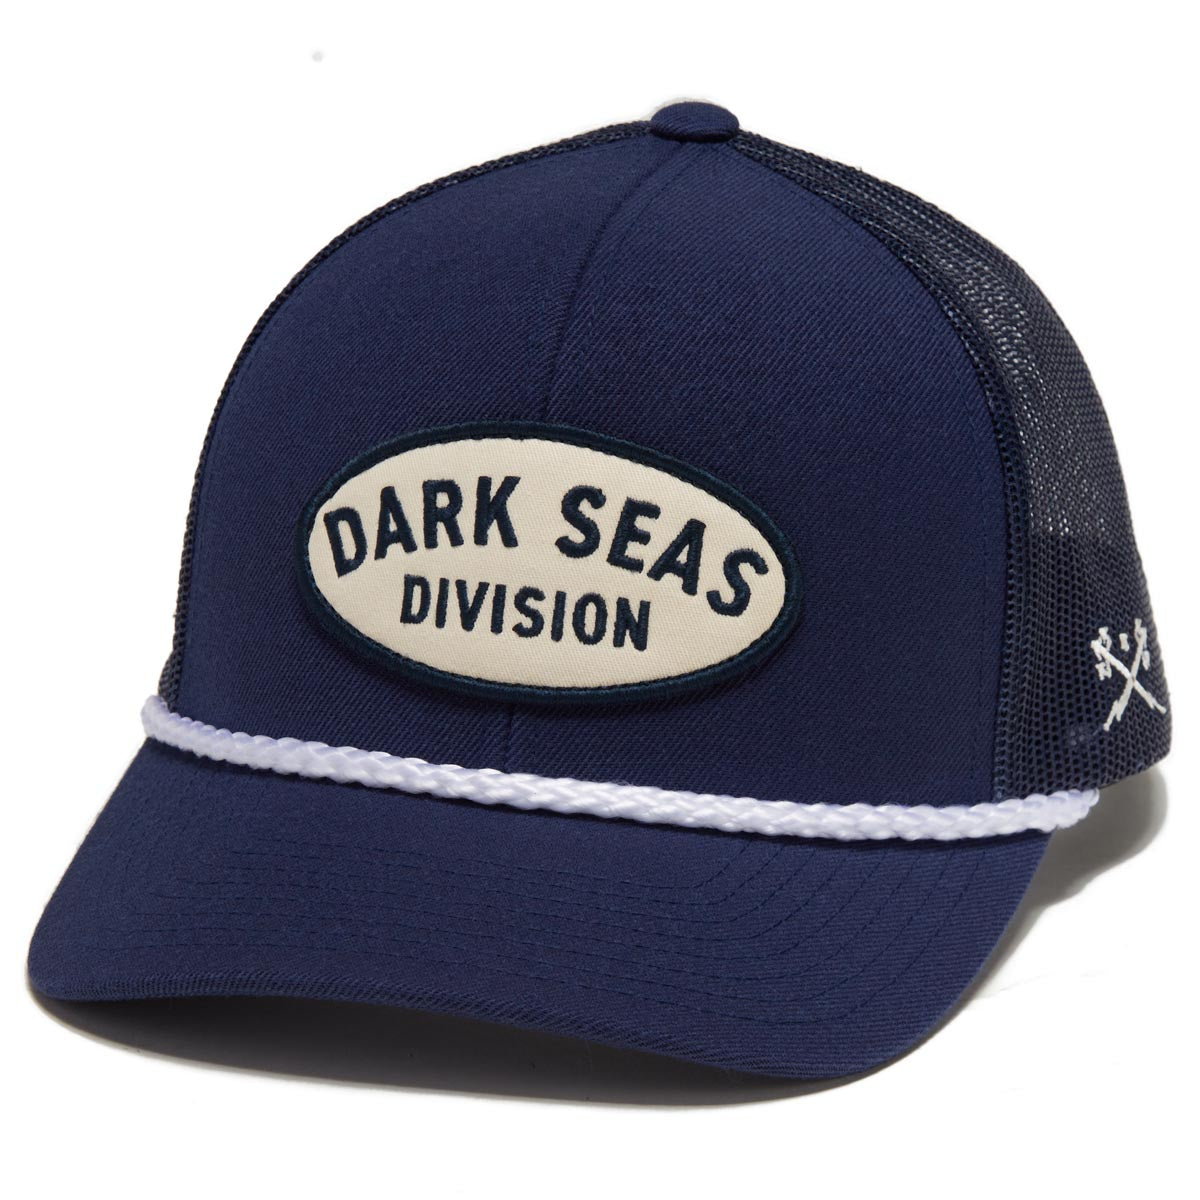 Dark Seas Clubhouse Hat - Navy image 1